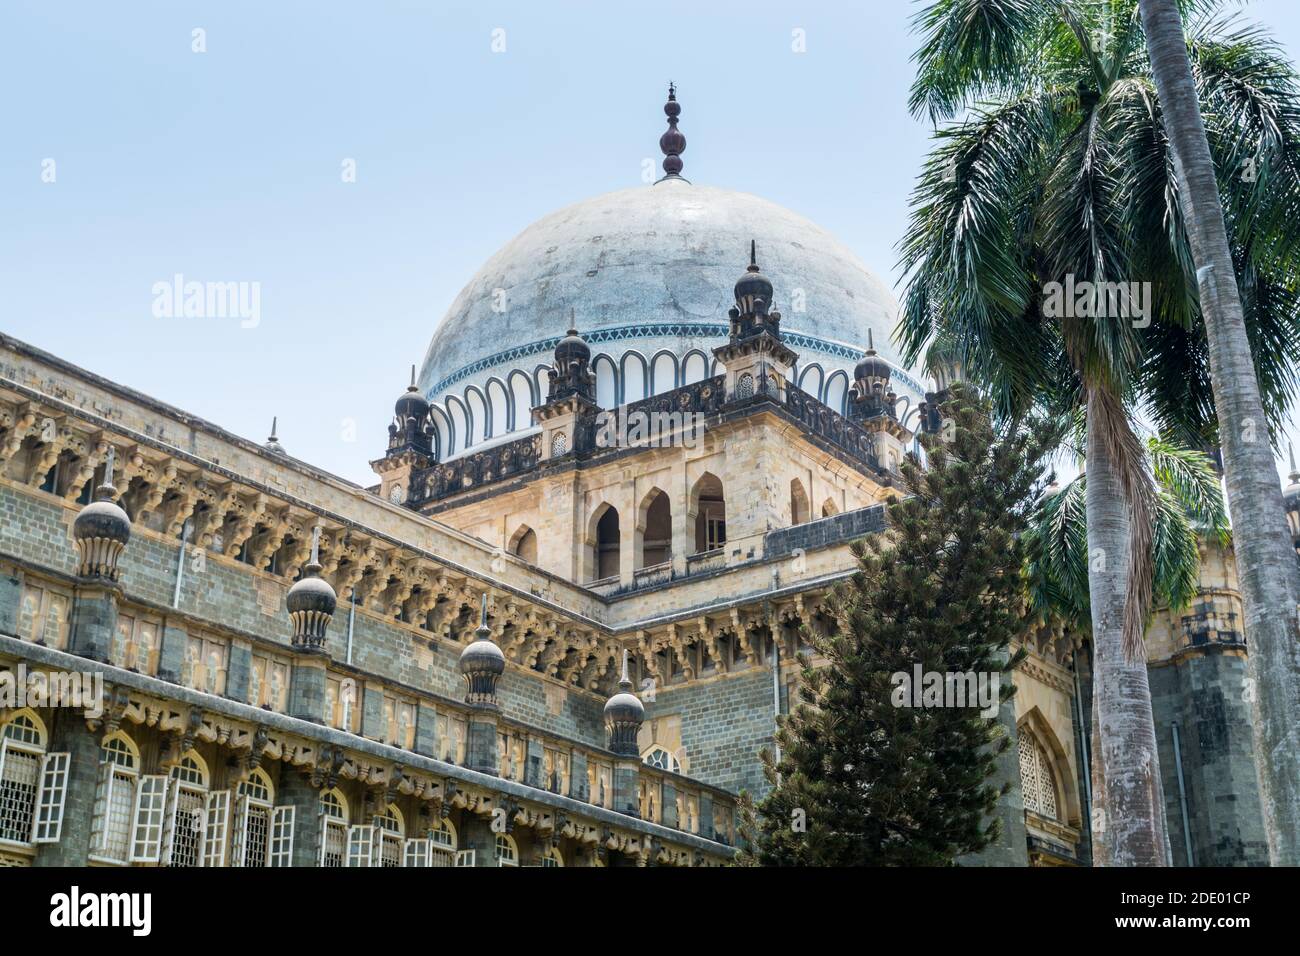 Hauptgebäude von Chhatrapati Shivaji Maharaj Vastu Sangrahalaya, früher der Prinz von Wales Museum, das wichtigste Museum in Mumbai, Maharashtra, Indien. Stockfoto